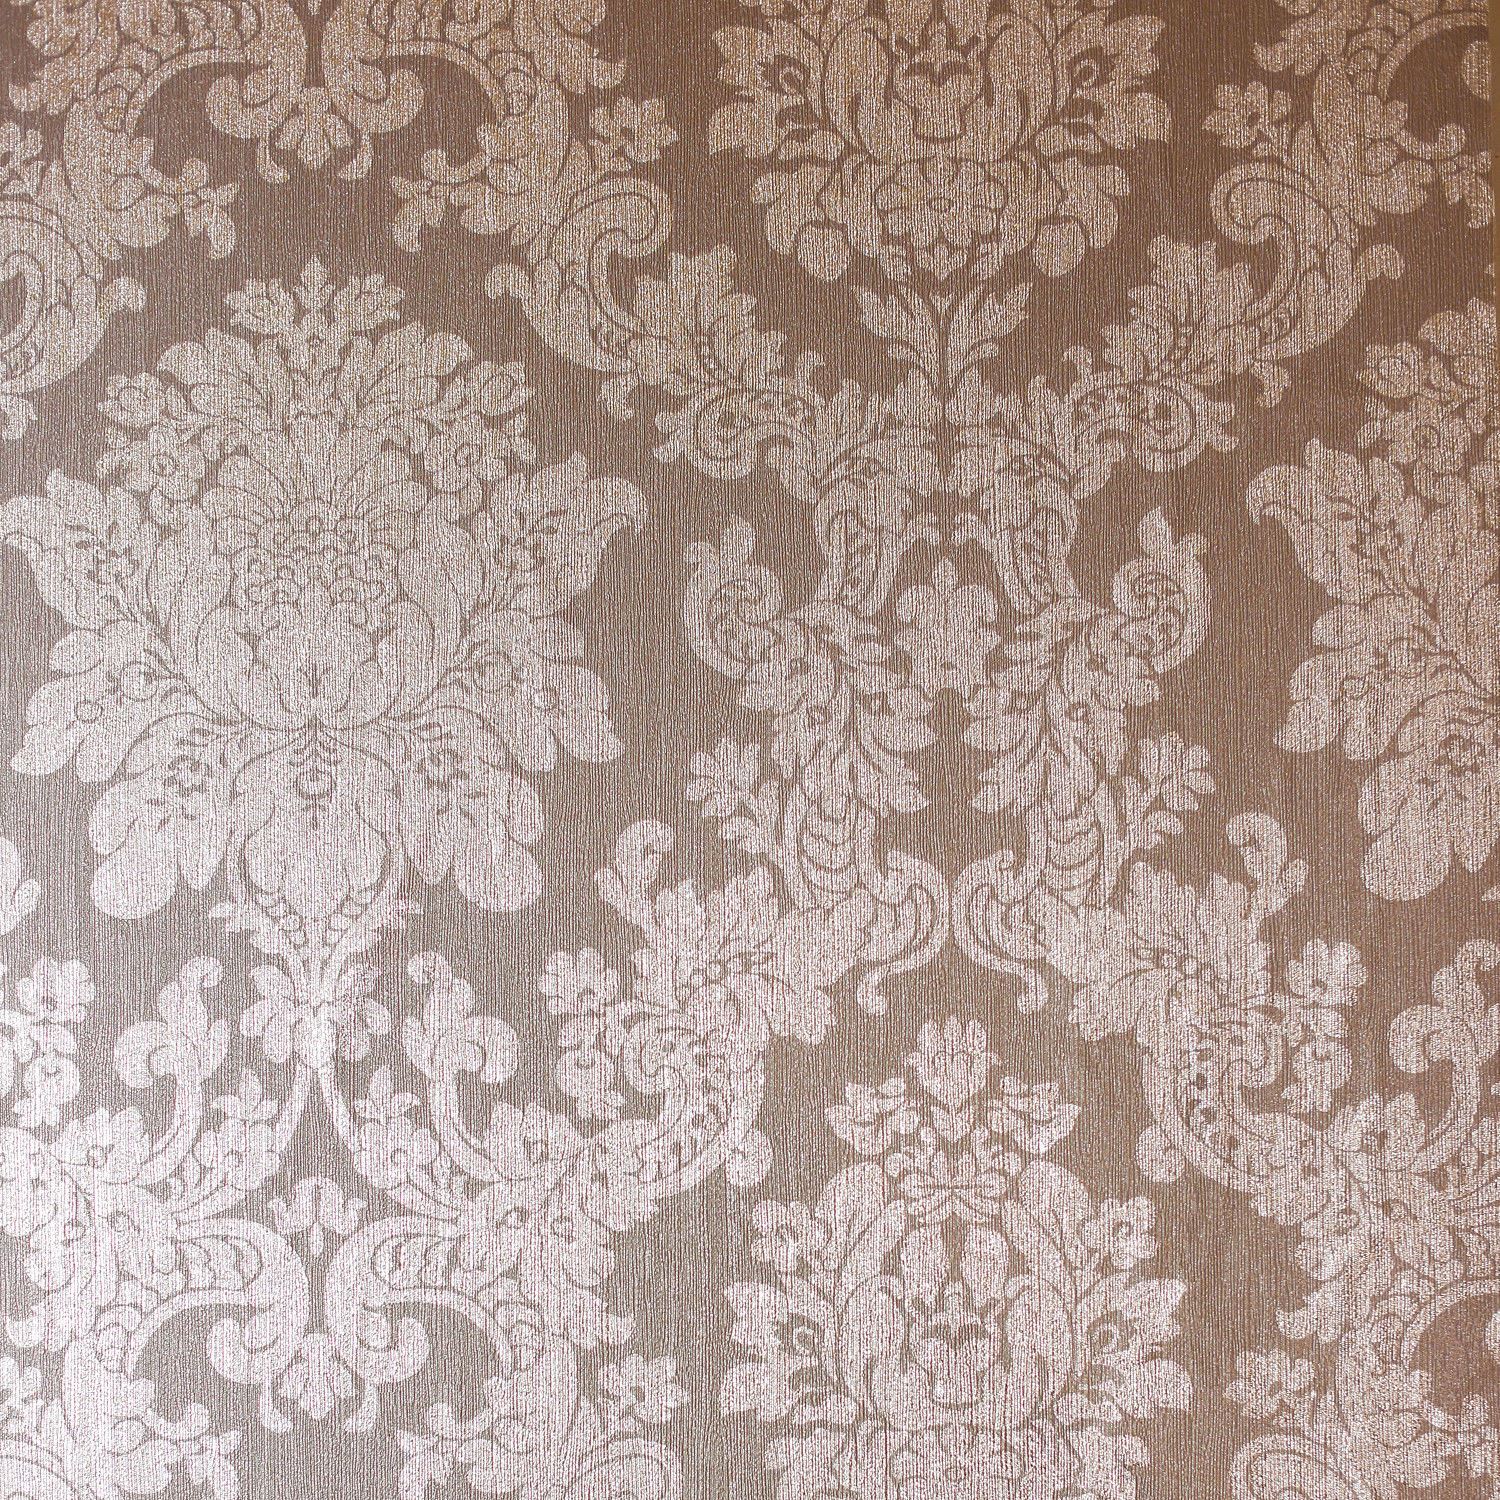 teal damask wallpaper,pattern,brown,wallpaper,beige,textile